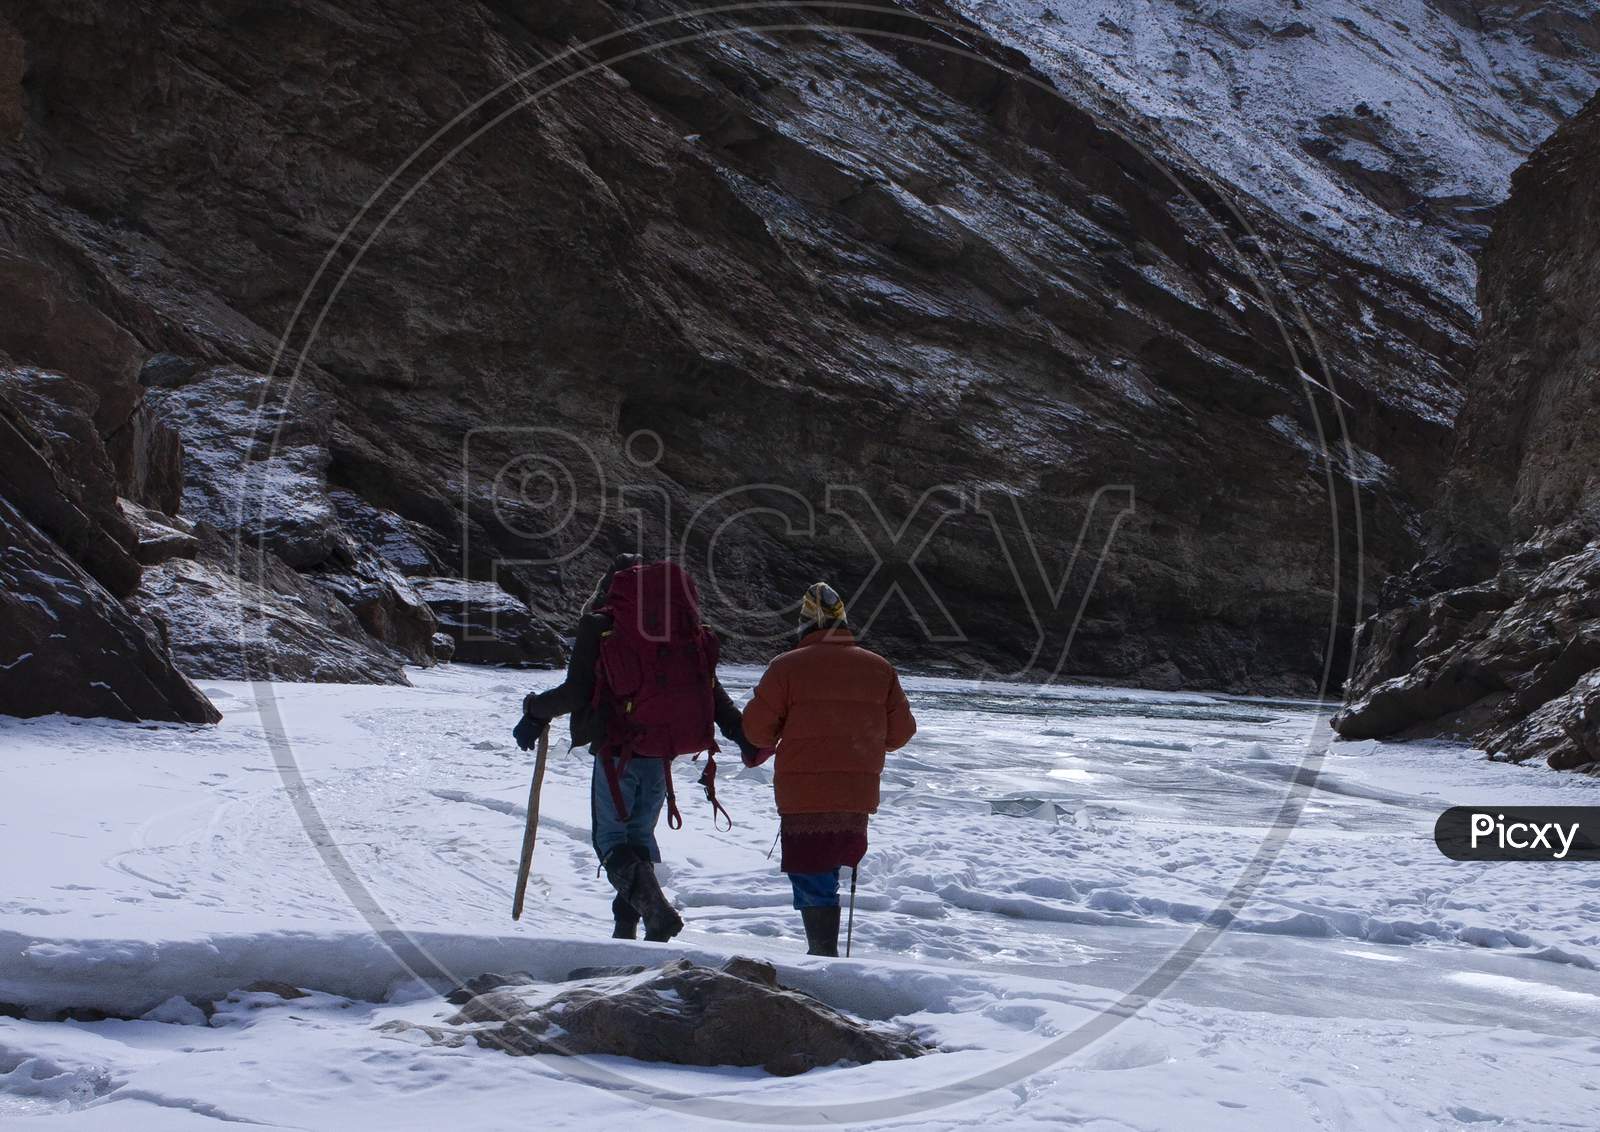 Adventurous High Altitude Trekking On The Frozen Zanskar River [ Known As Chadar Trek ] In Winter In Ladakh In India Carrying Rucksack And Walking Stick